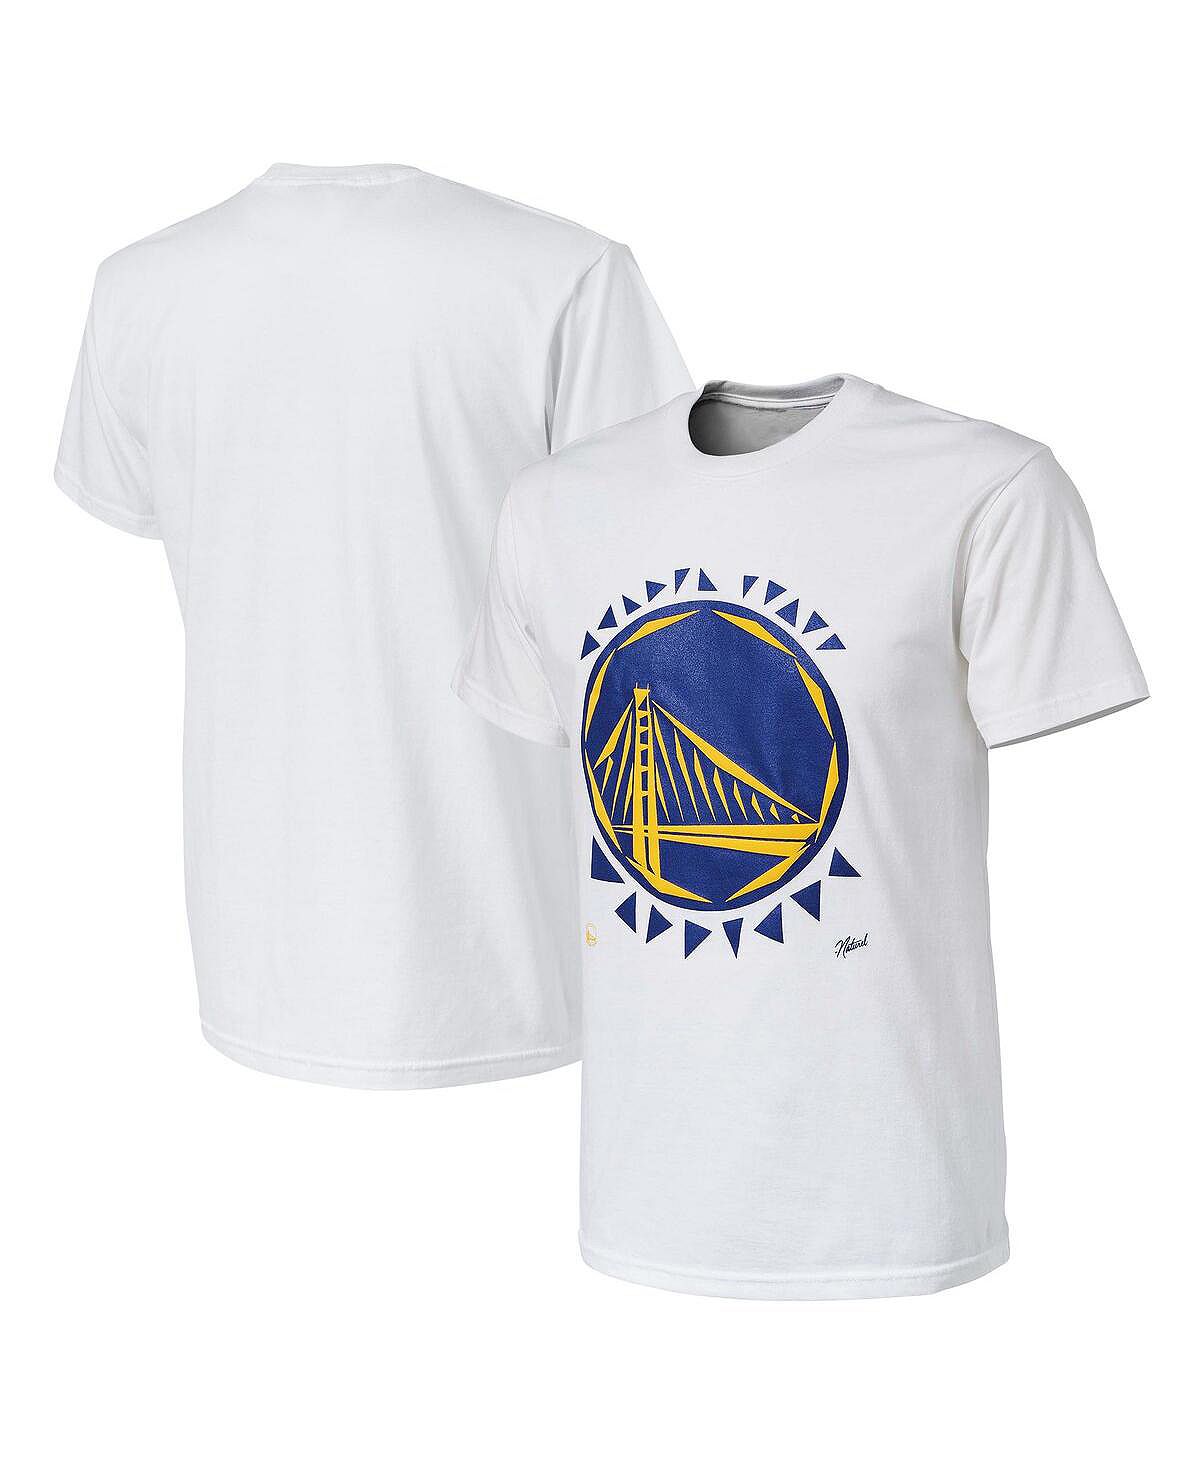 Мужская футболка nba x naturel white golden state warriors no caller id NBA Exclusive Collection, белый